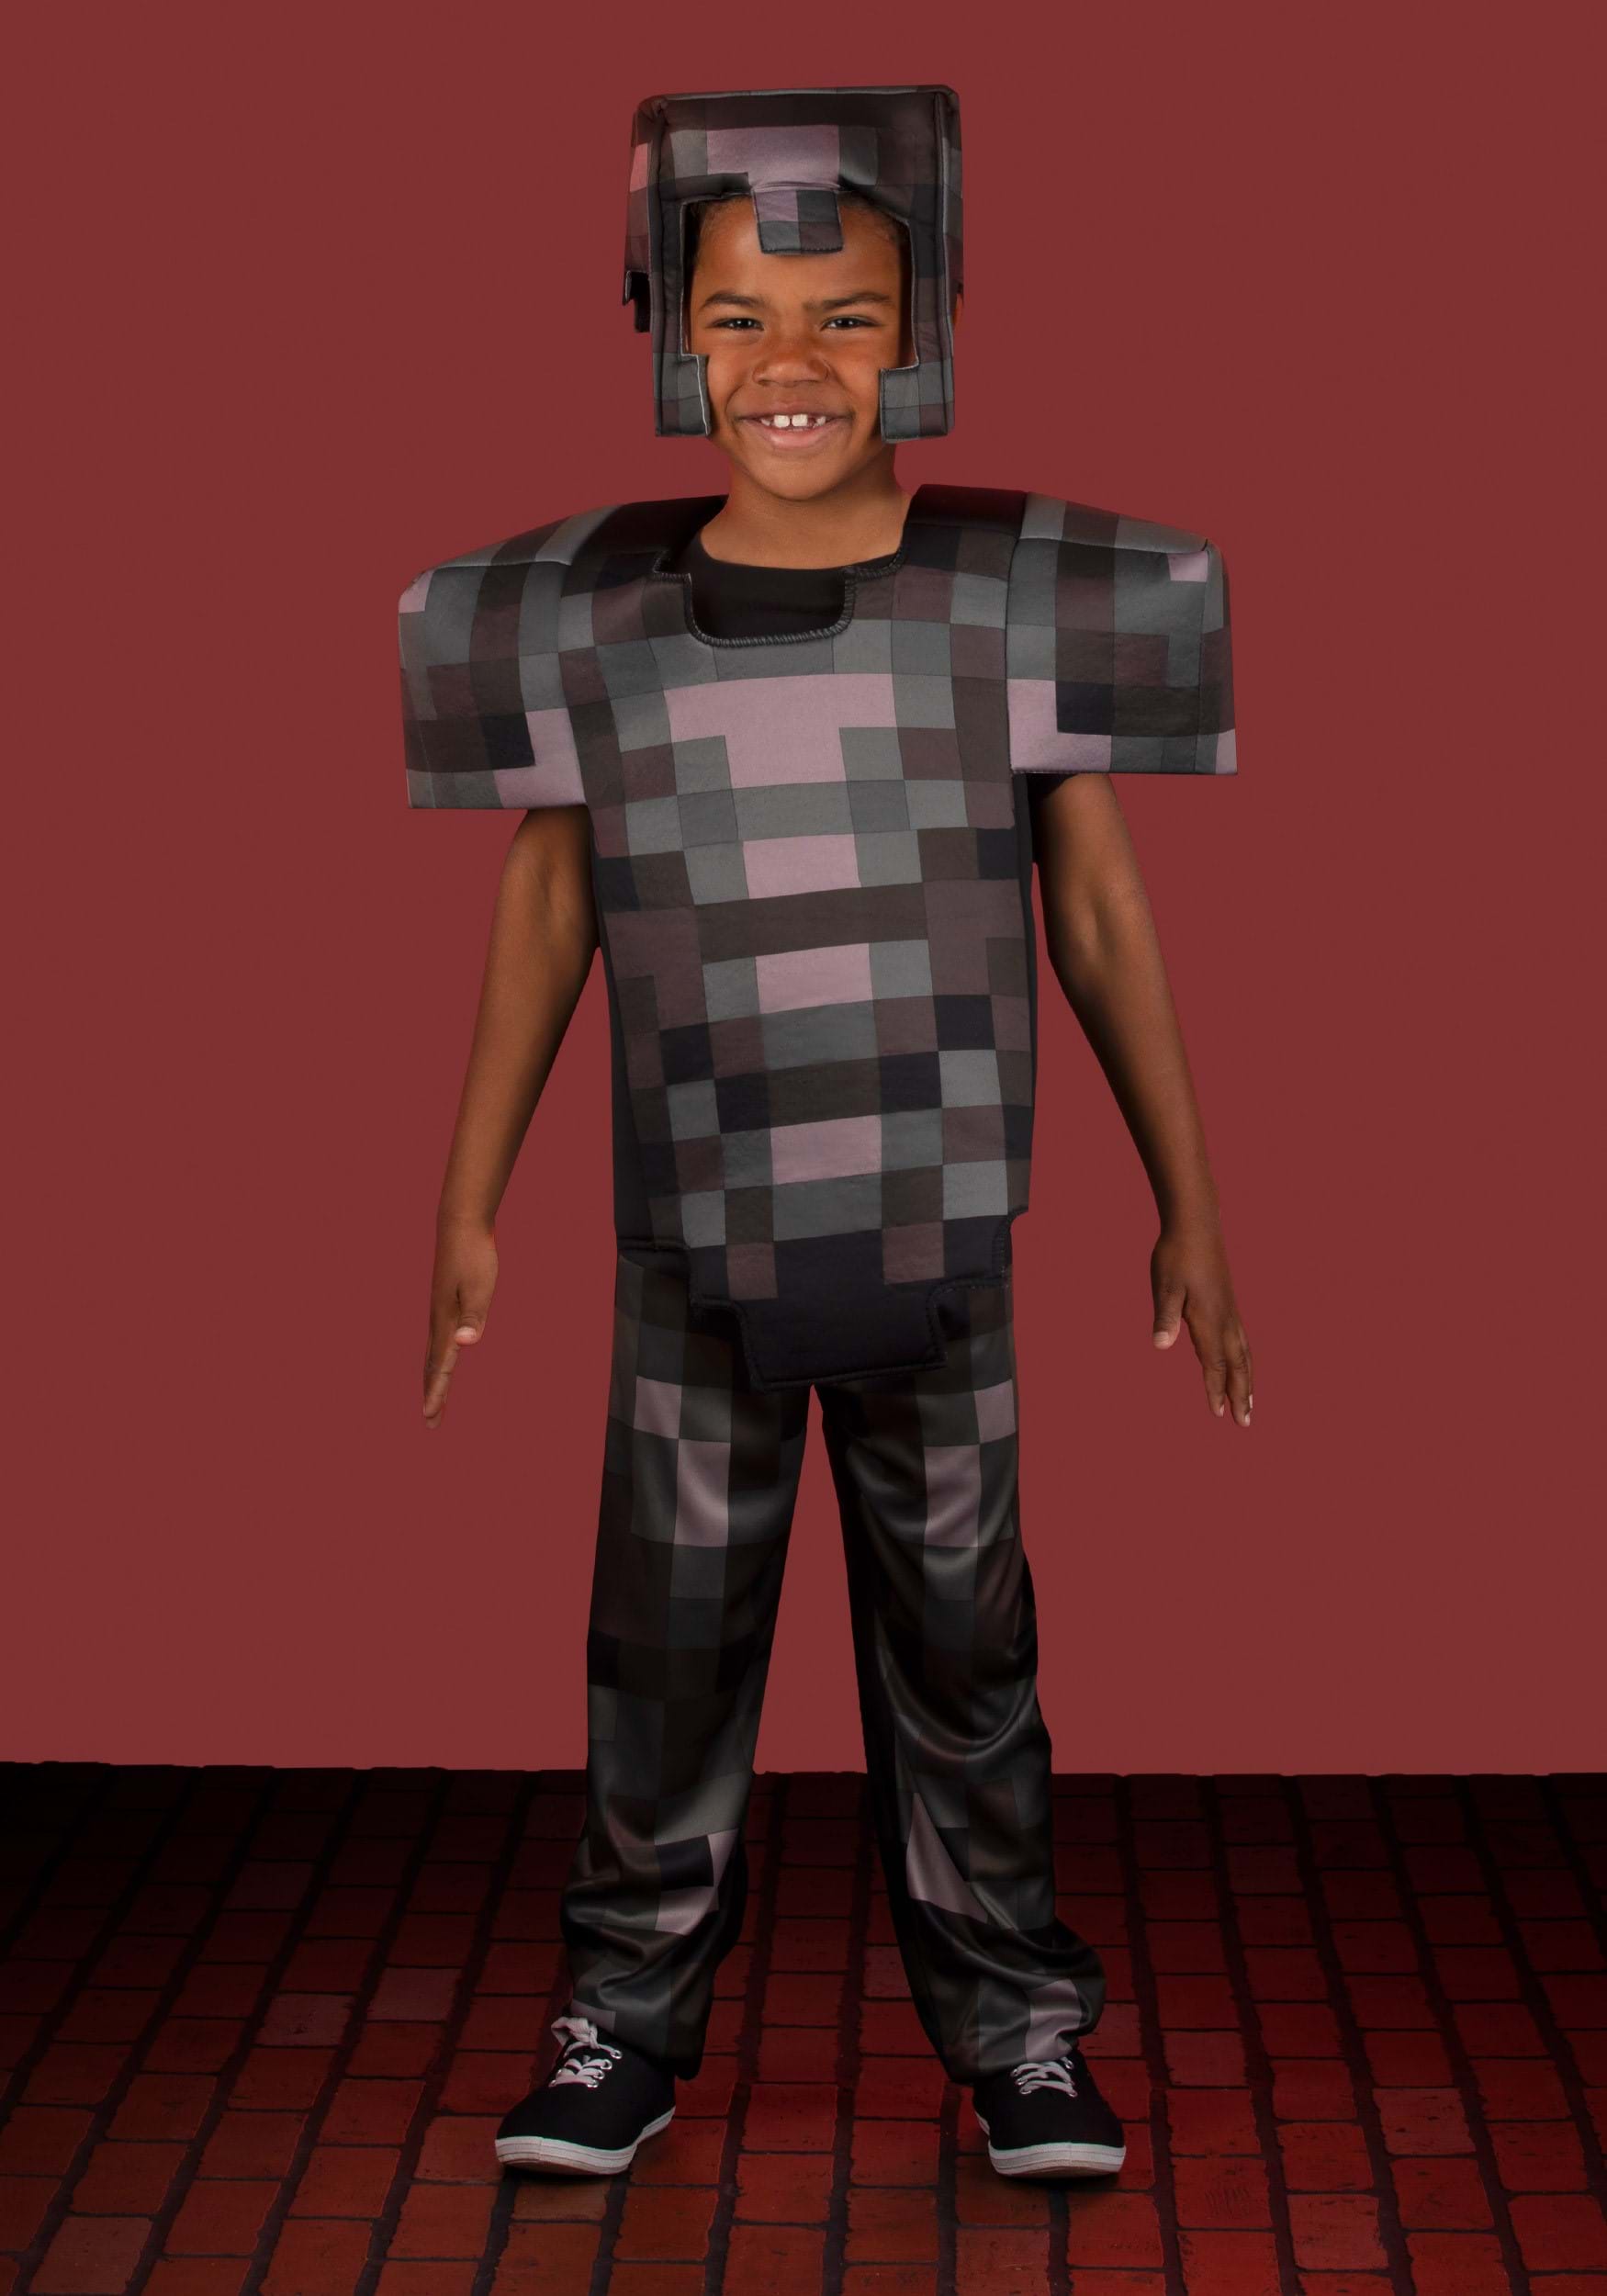 Minecraft Netherite Armor Kids Deluxe Costume